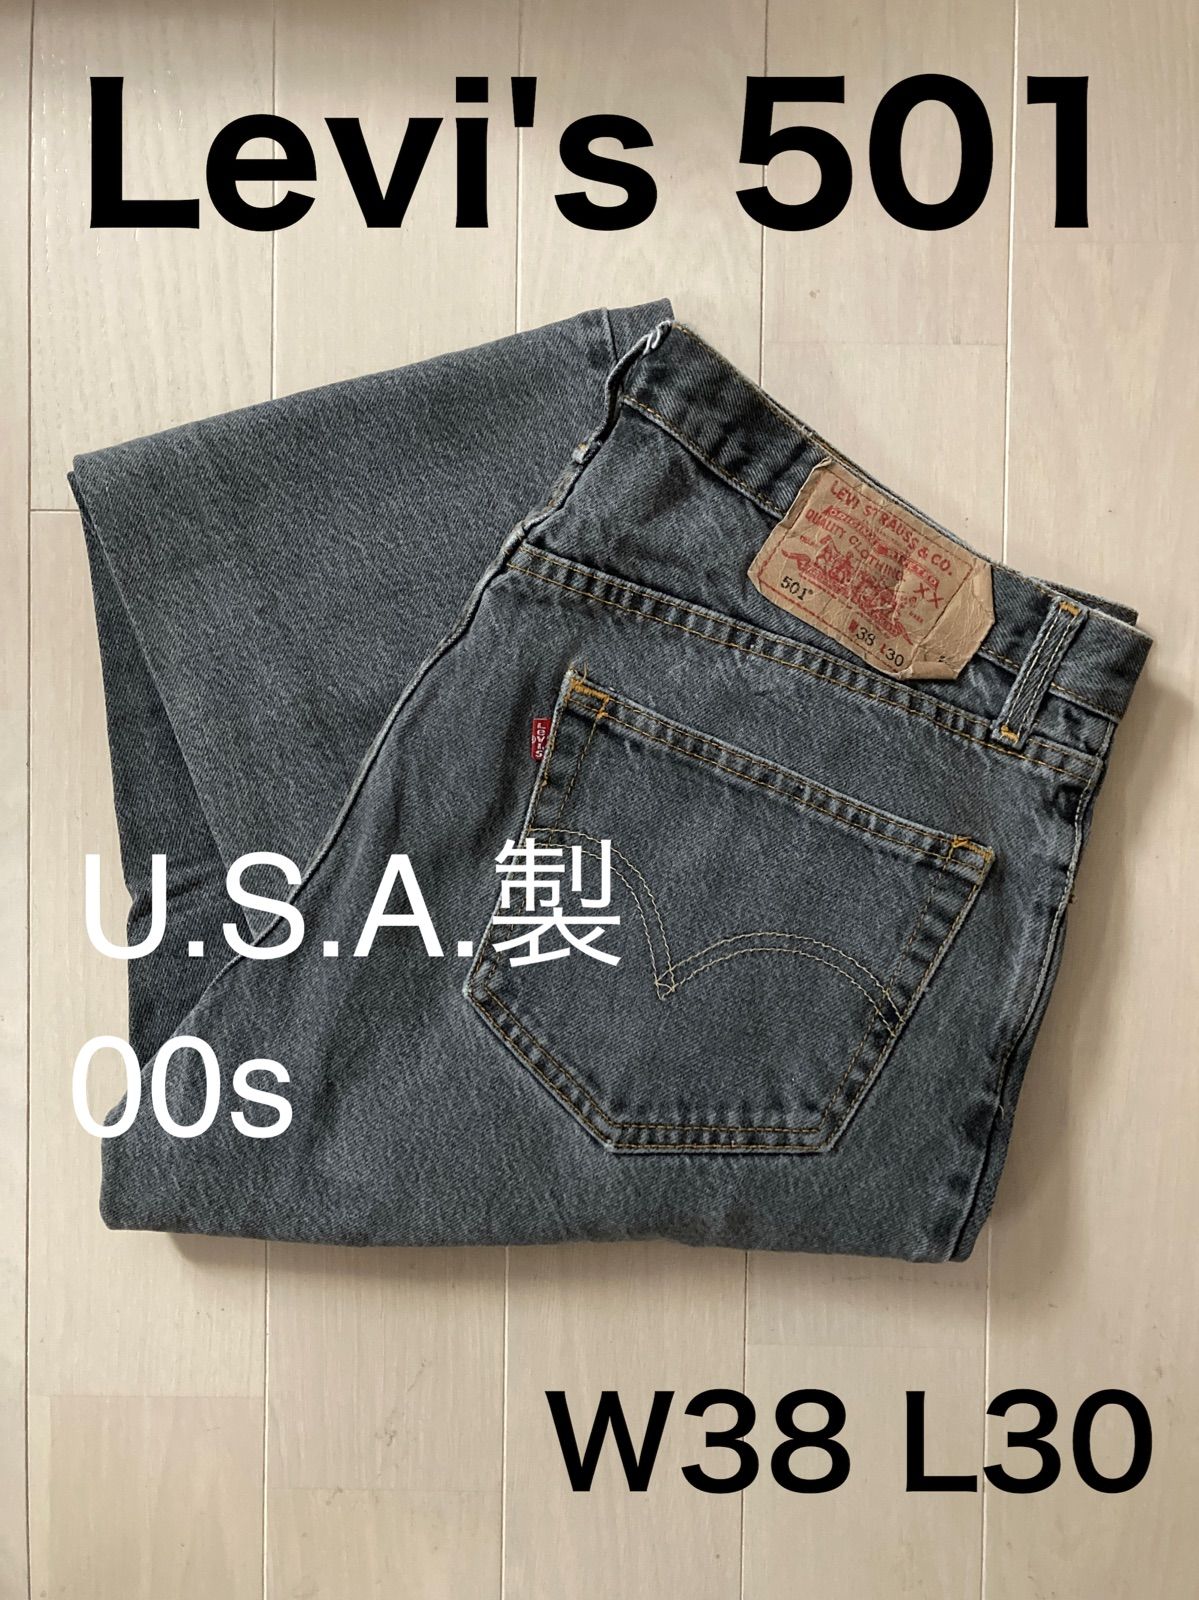 T12【Levi's 501】00s W38 L30 USA製 ブラック 先染め - LOBO'S STORE ...